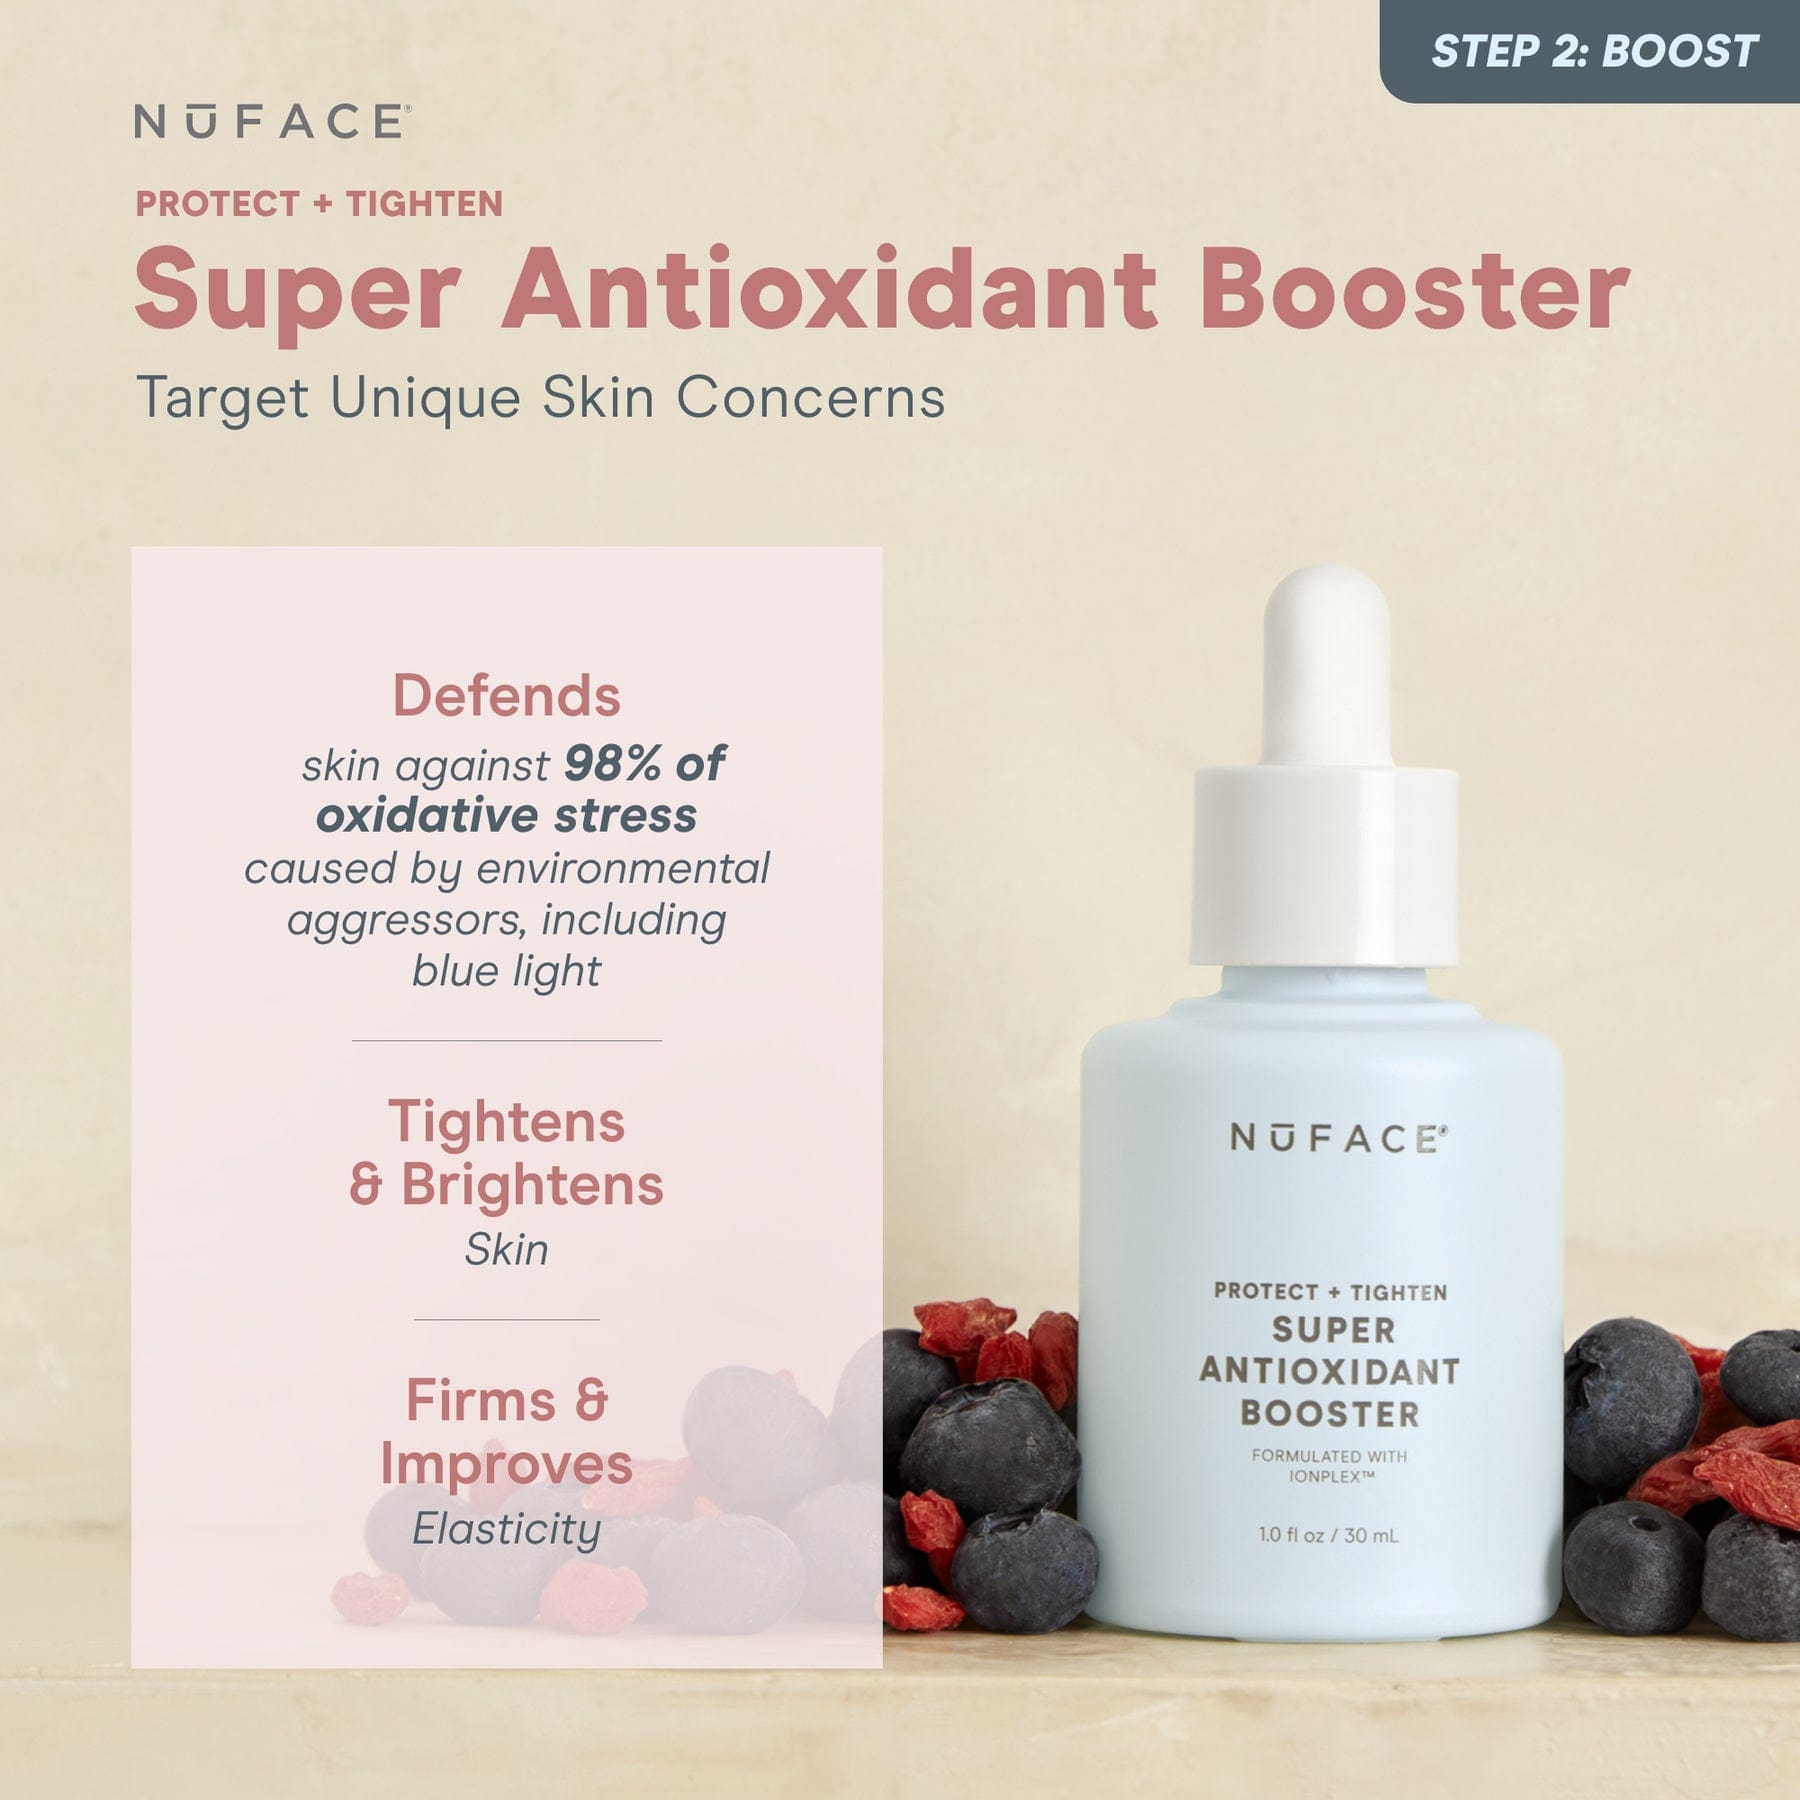 NuFACE booster antioxidant Serum bottle showing benefits.